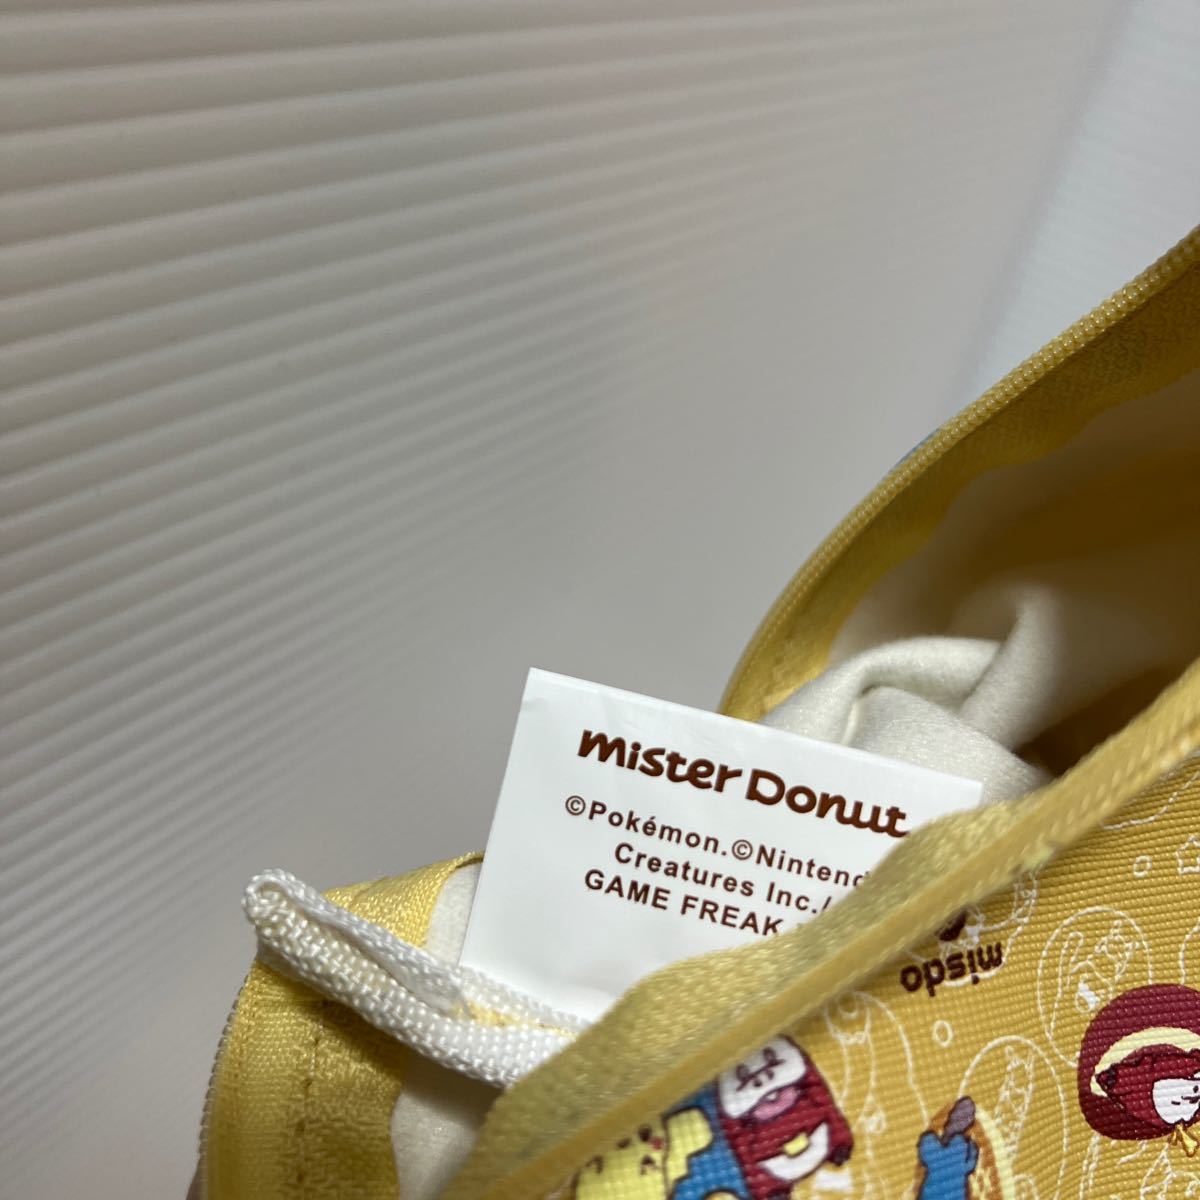  Mister Donut Pocket Monster pouch unused 